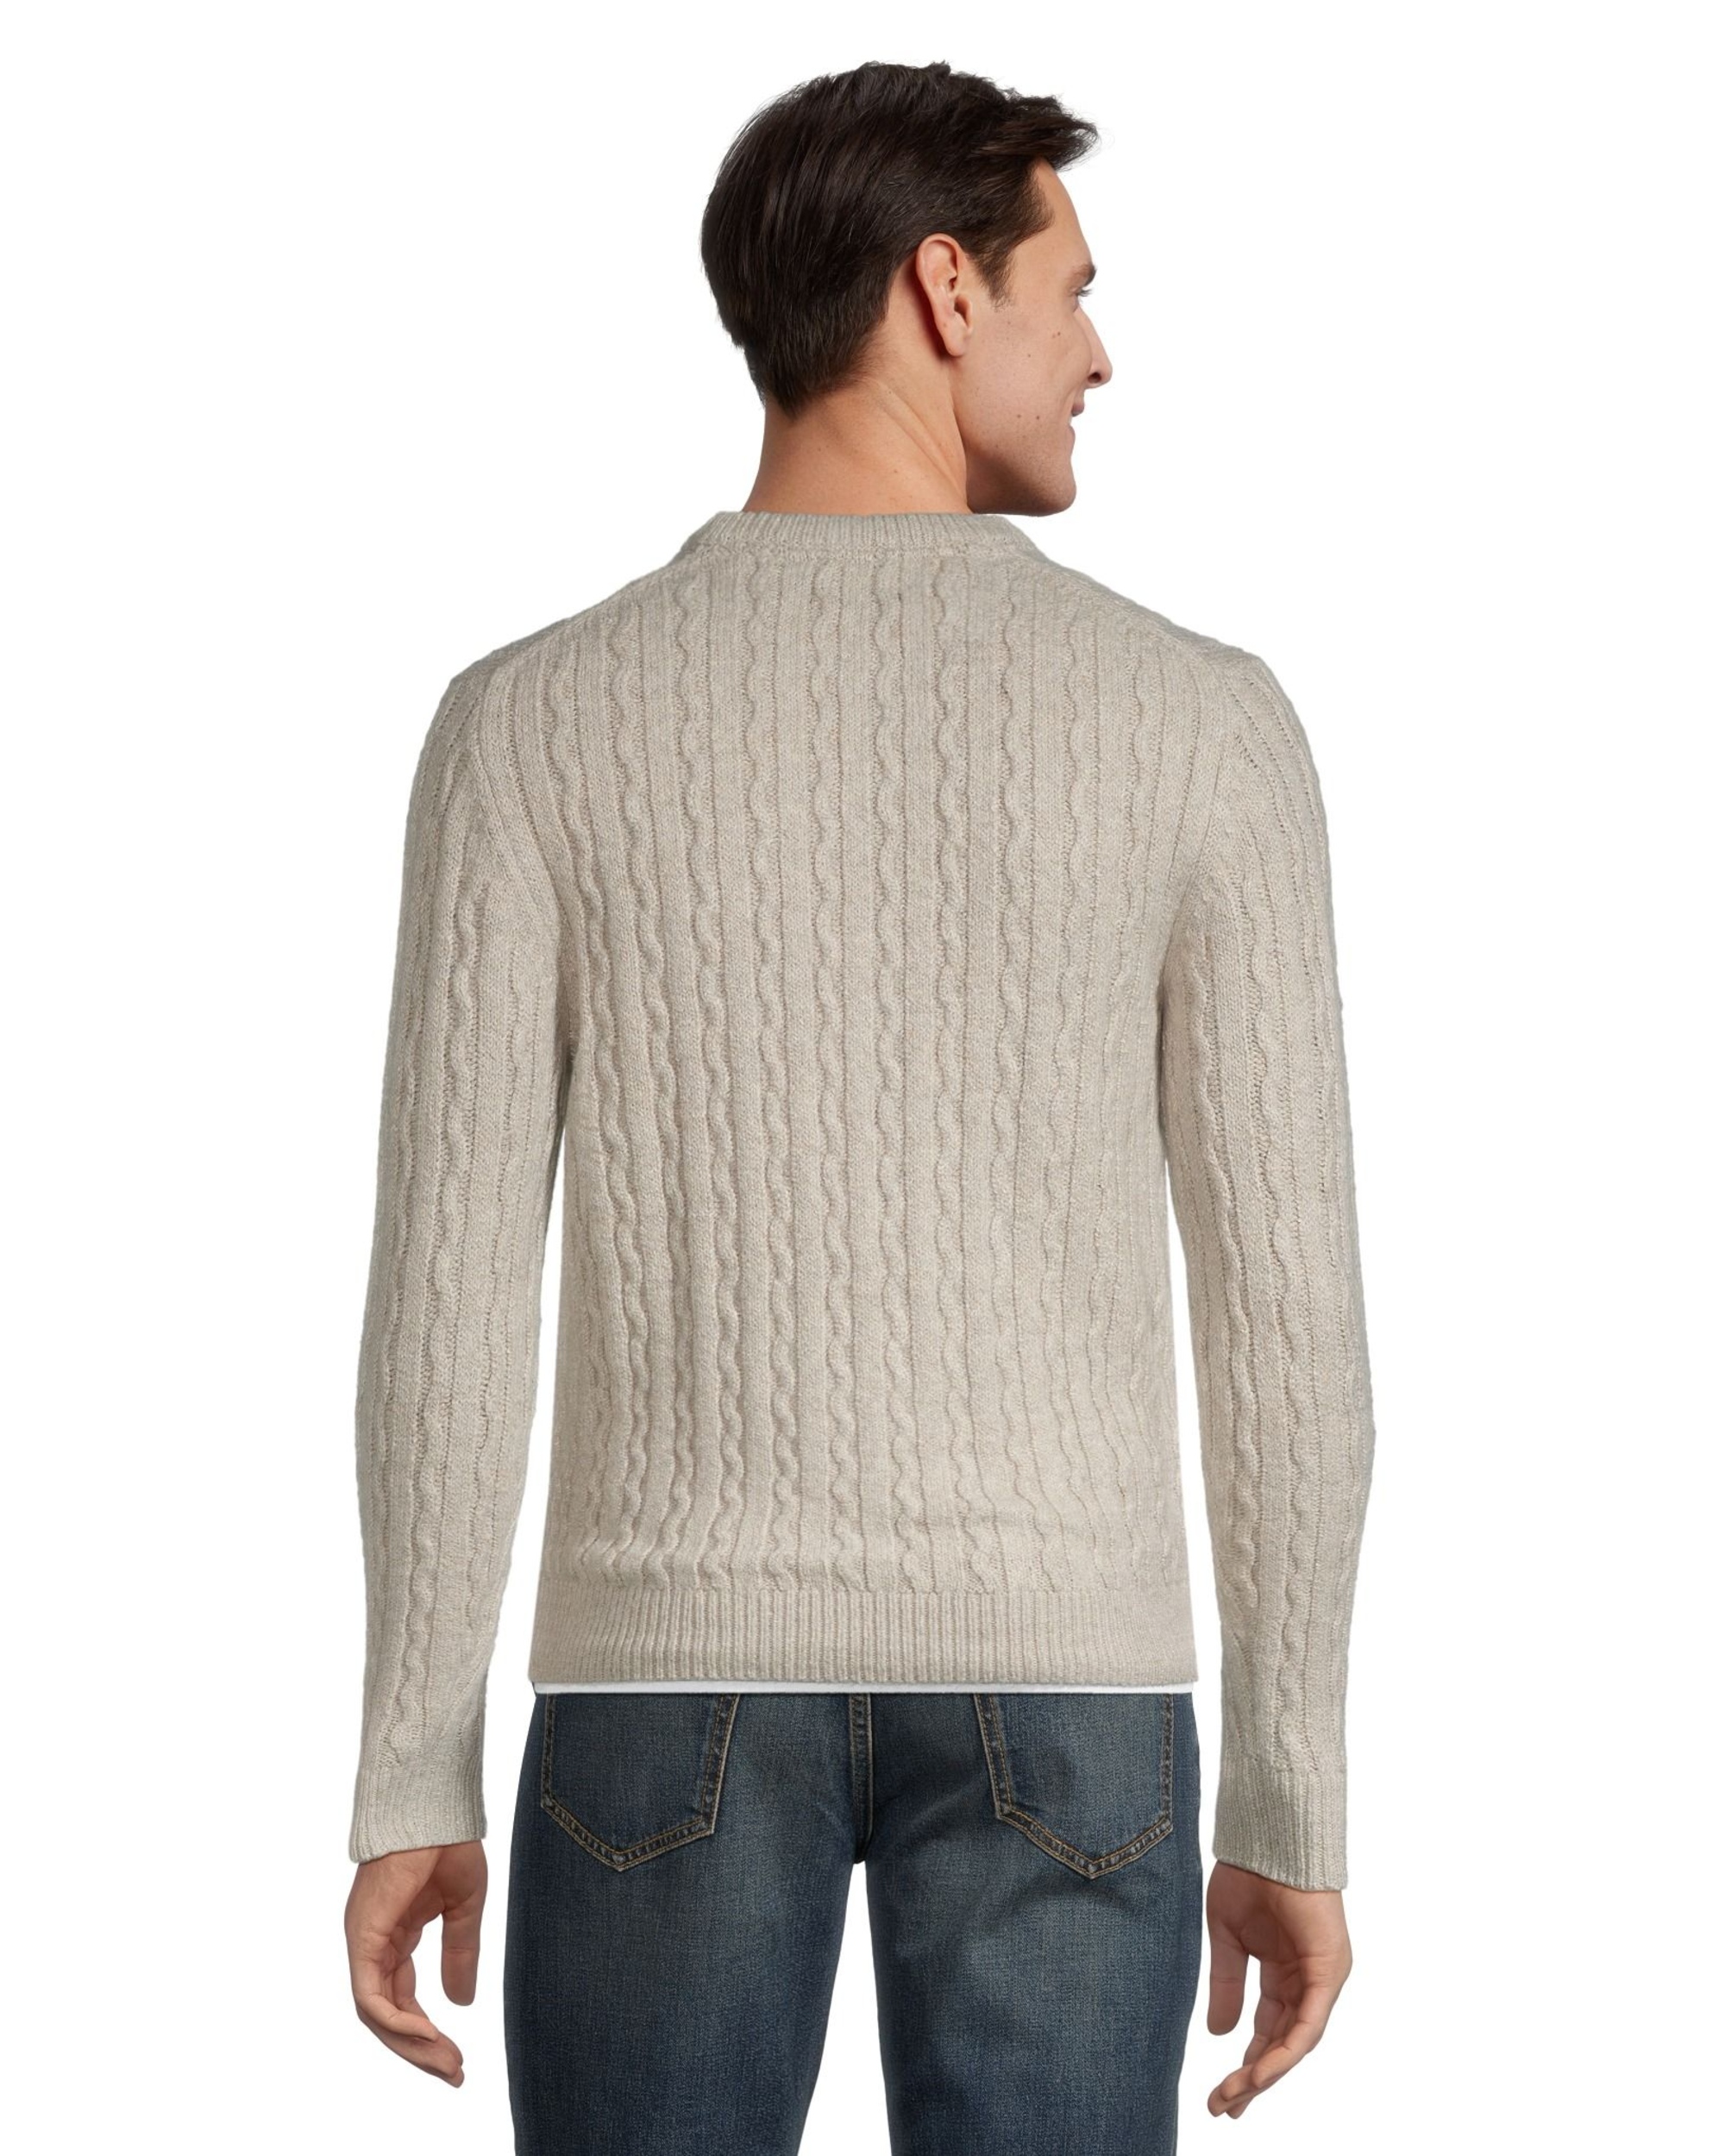 Denver Hayes Men's Cable Stitch Crewneck Sweater | Marks